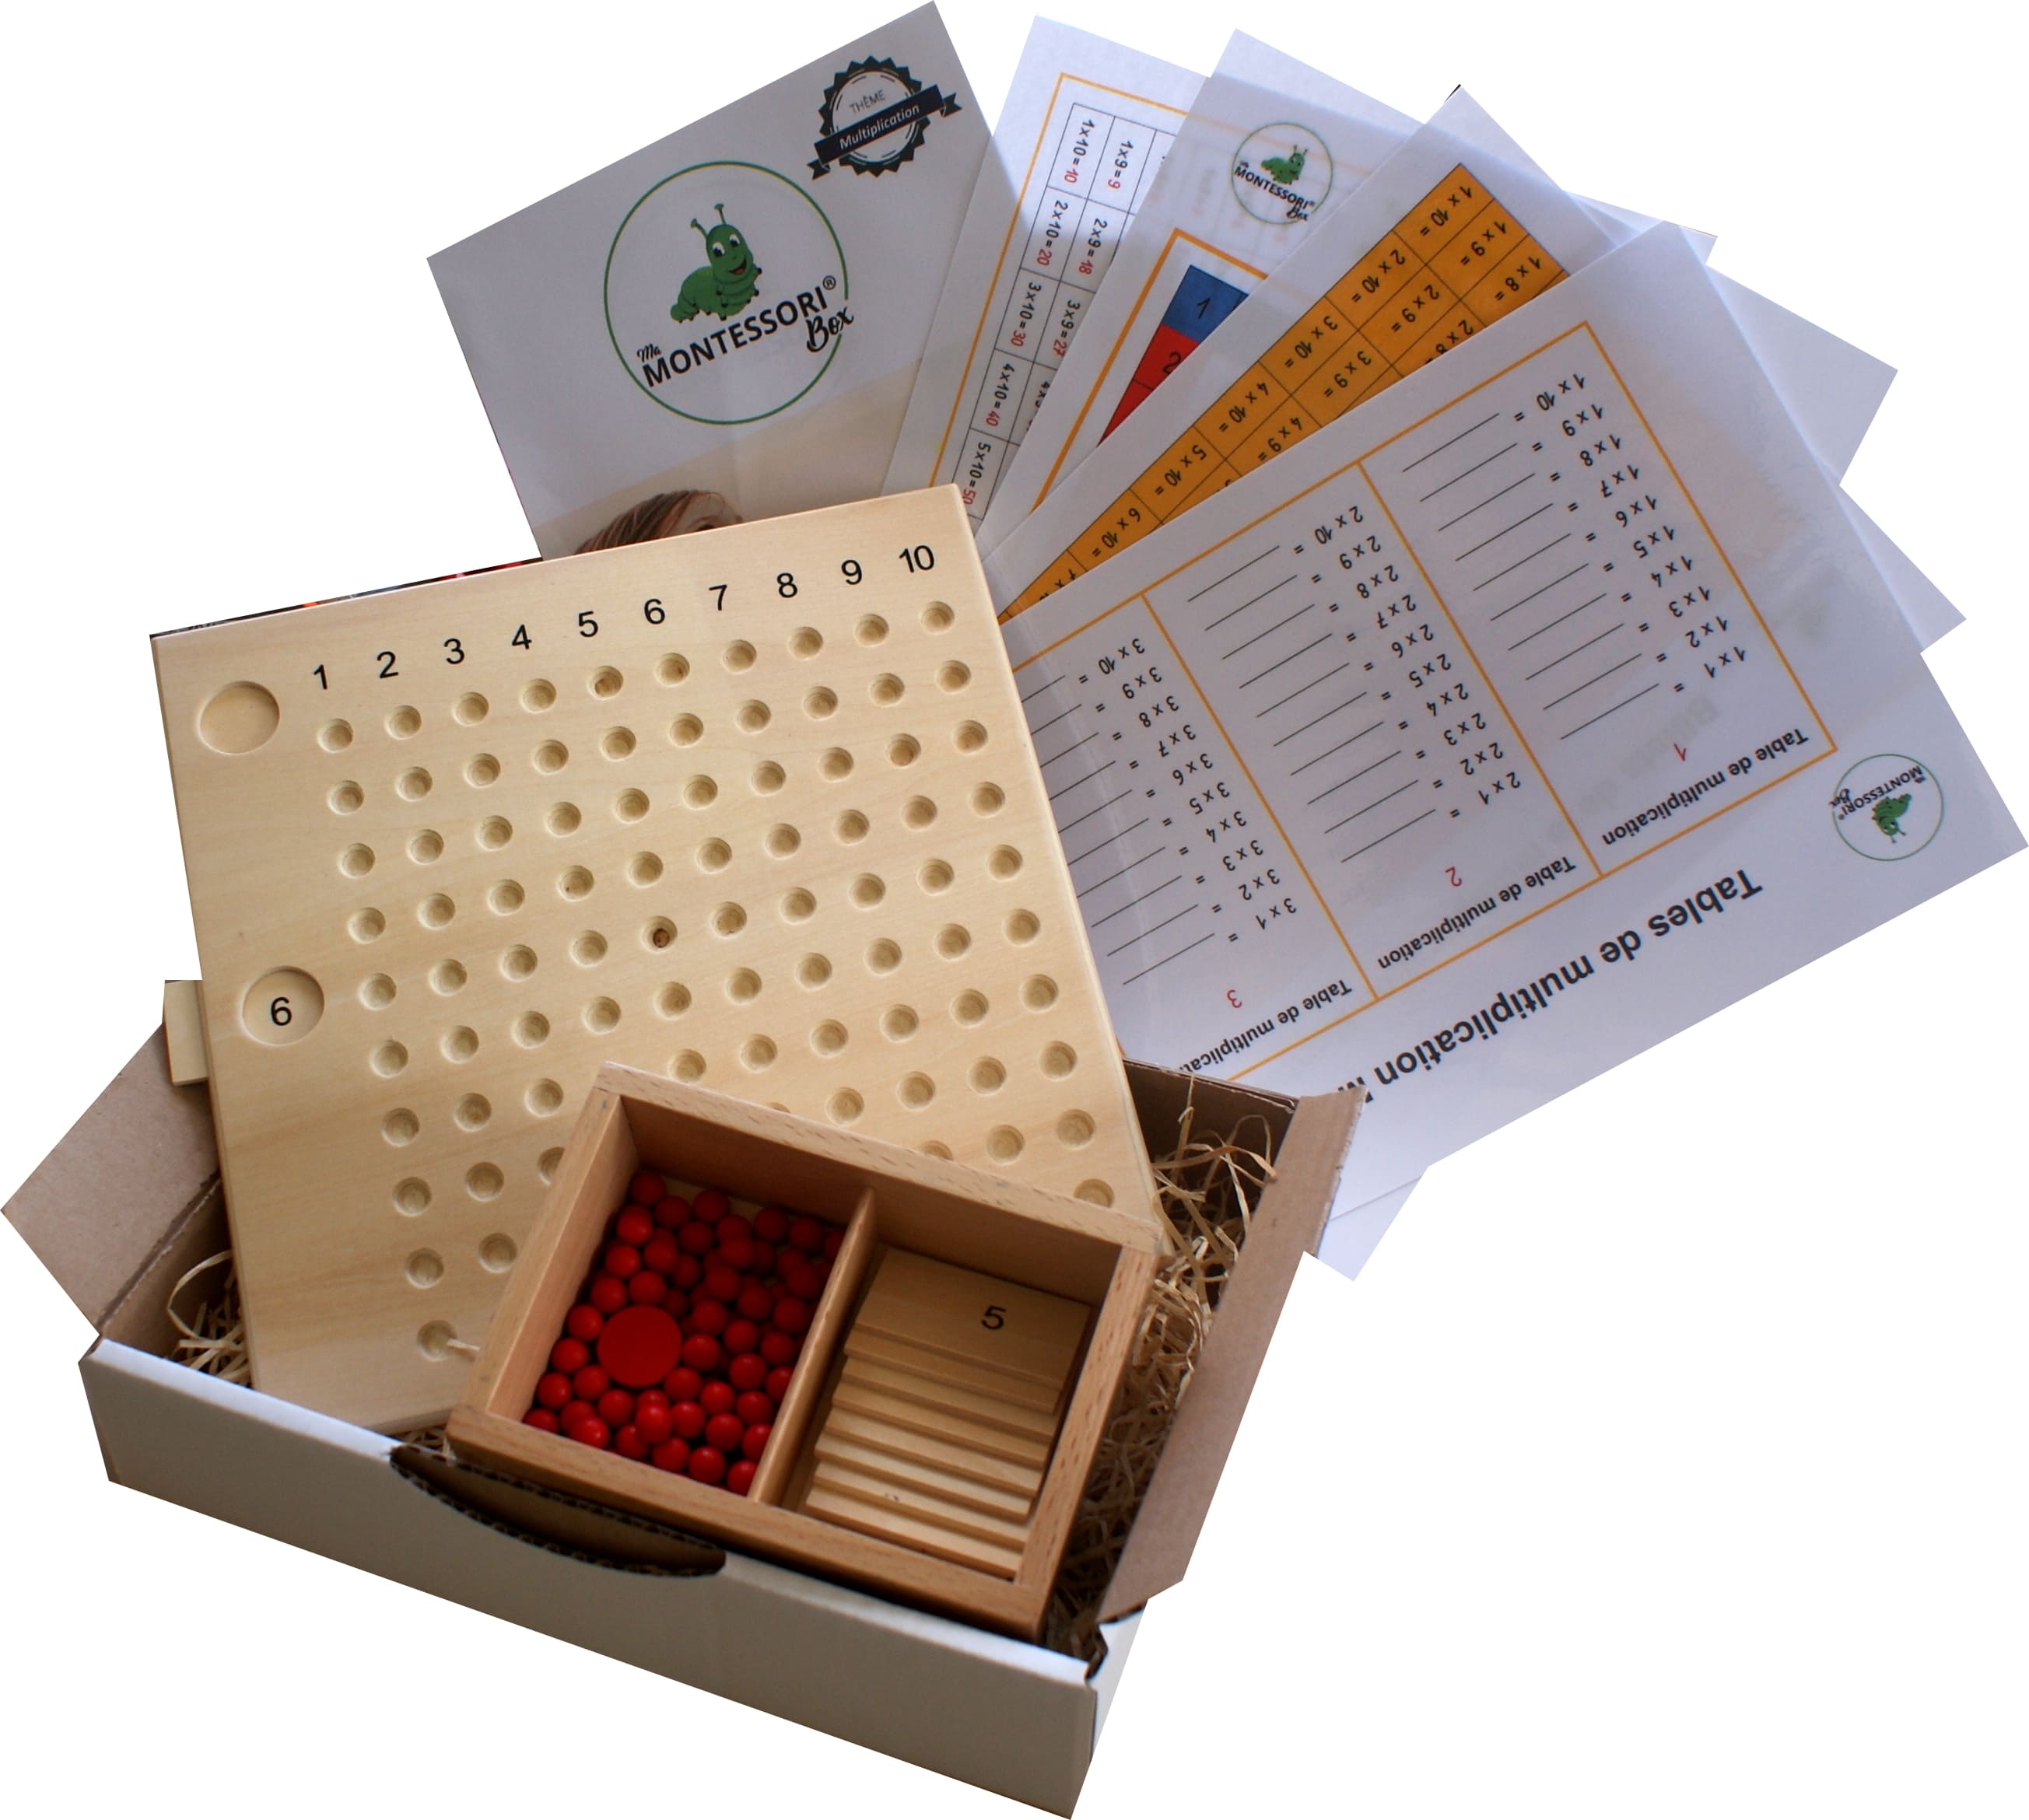 Multiplication Montessori - MaMontessoriBox